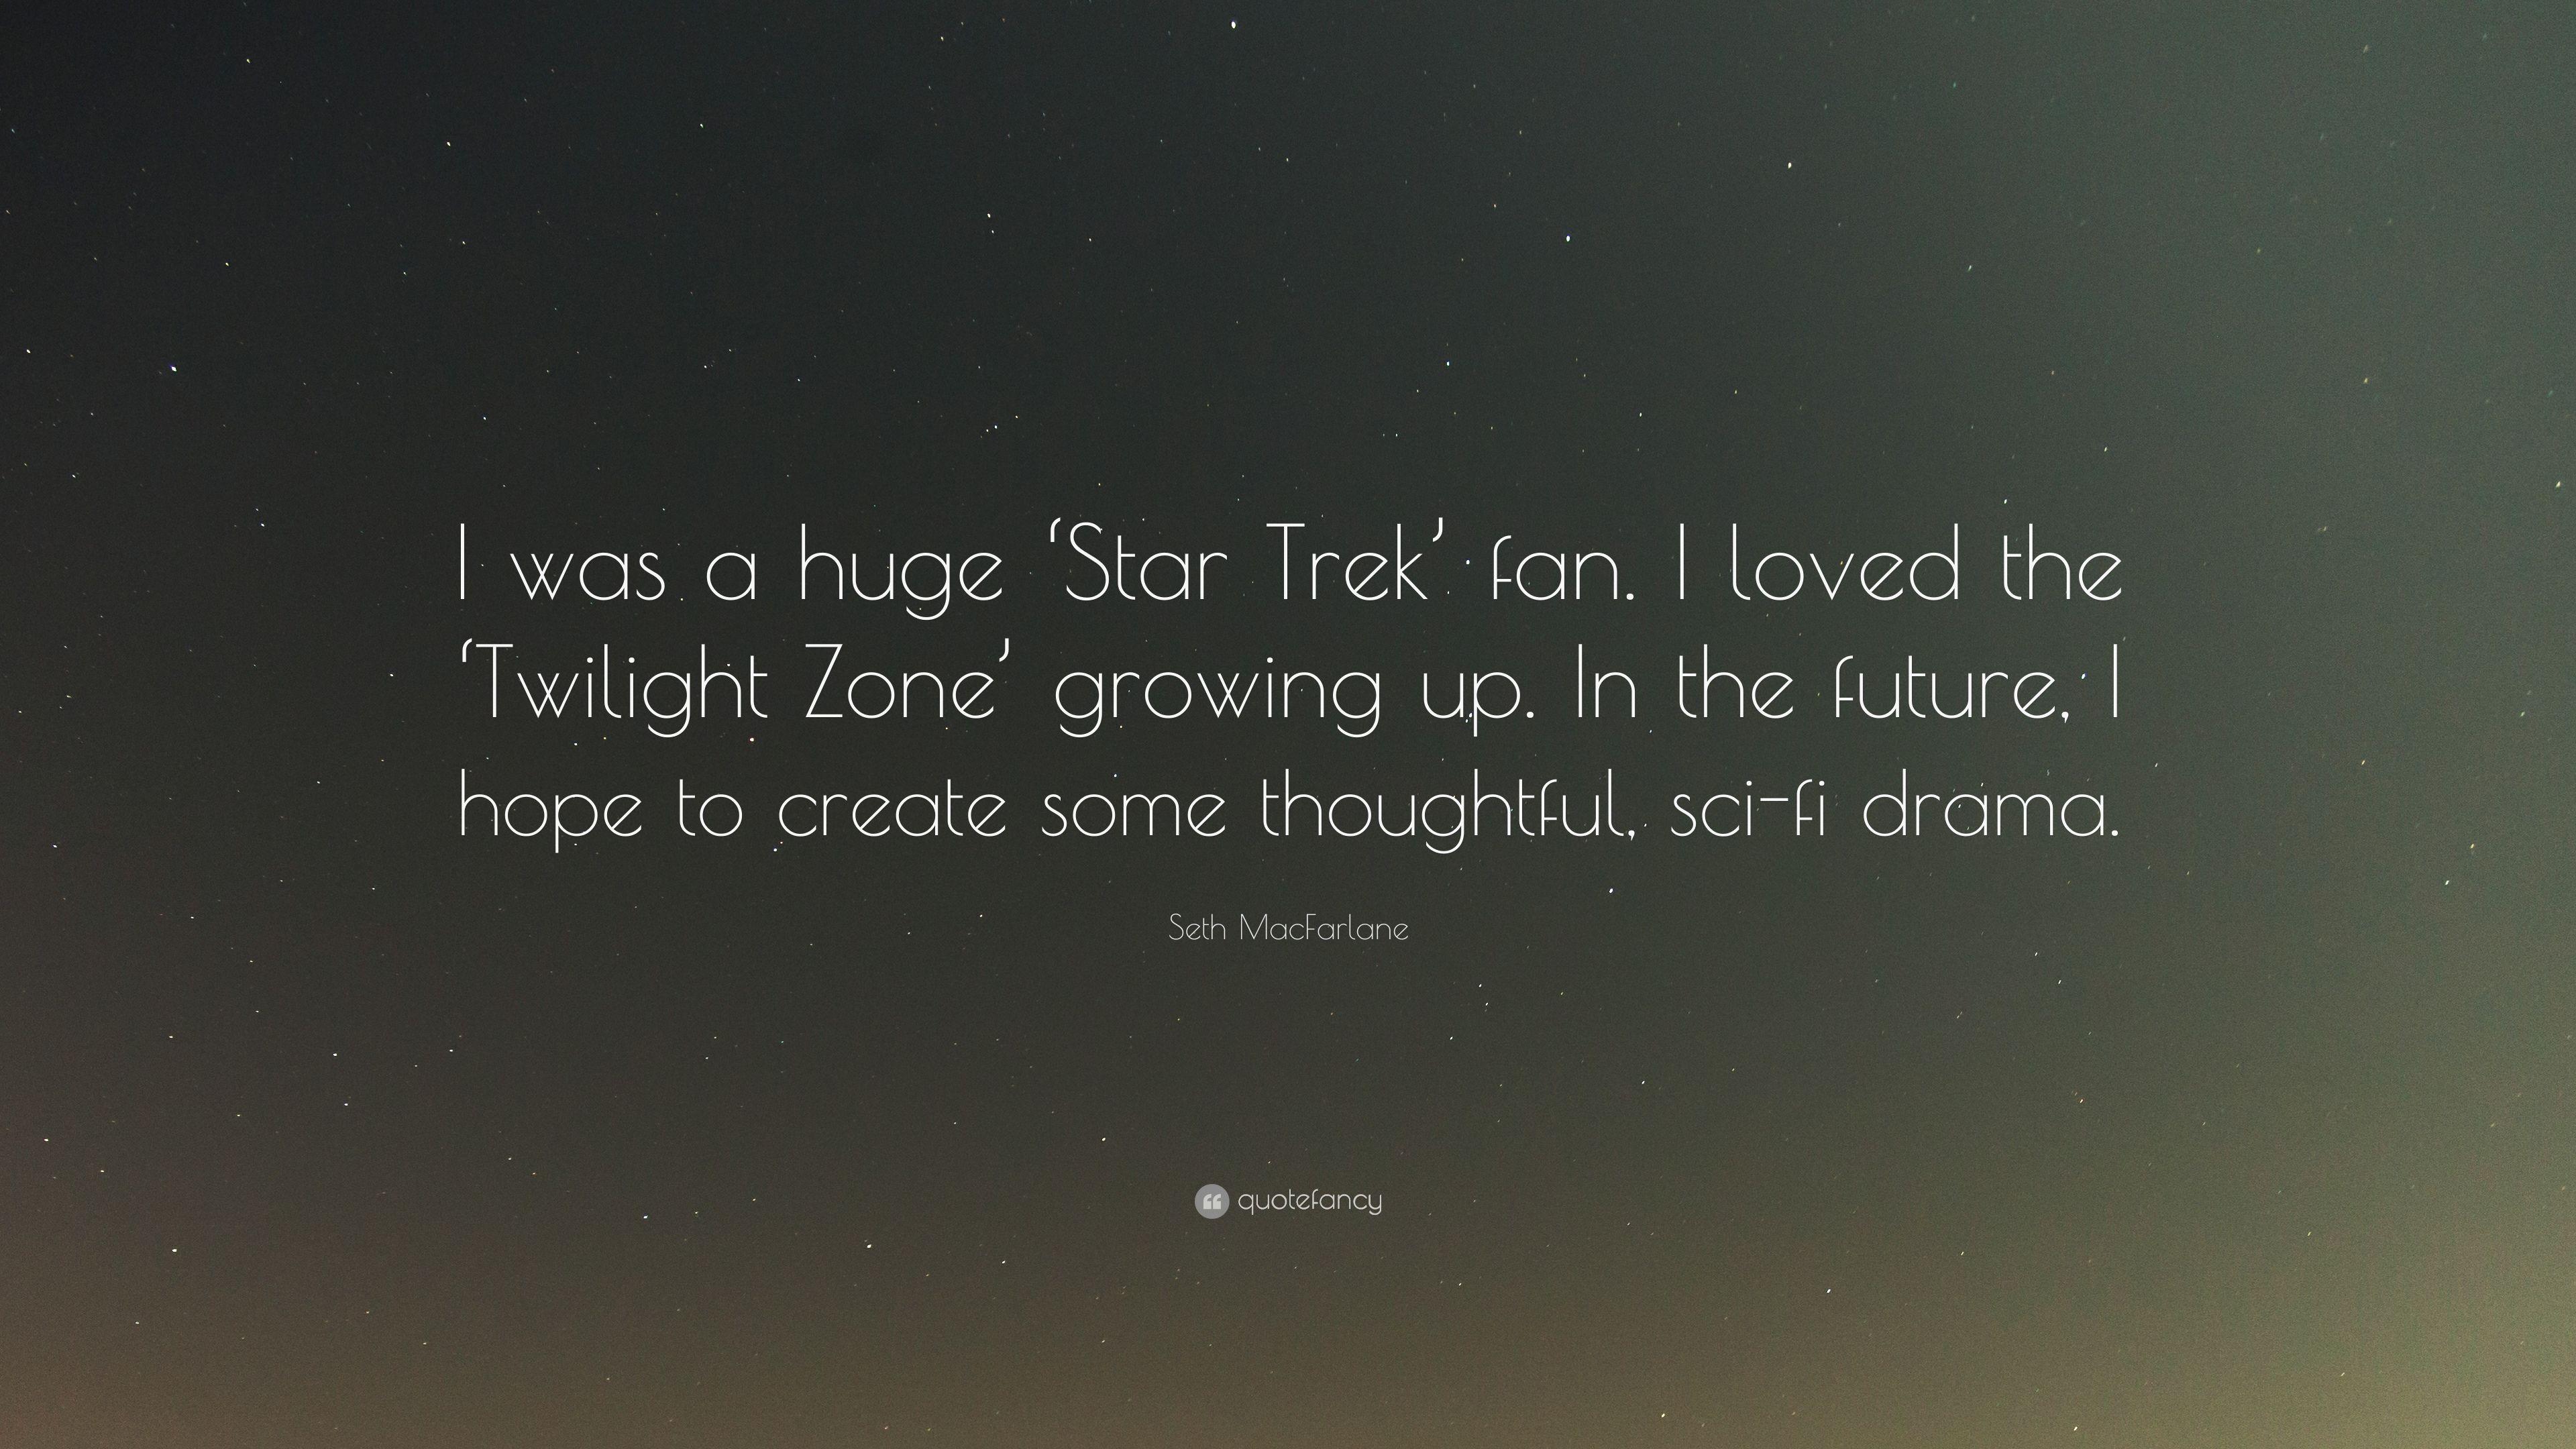 Seth MacFarlane Quote: “I was a huge 'Star Trek' fan. I loved the